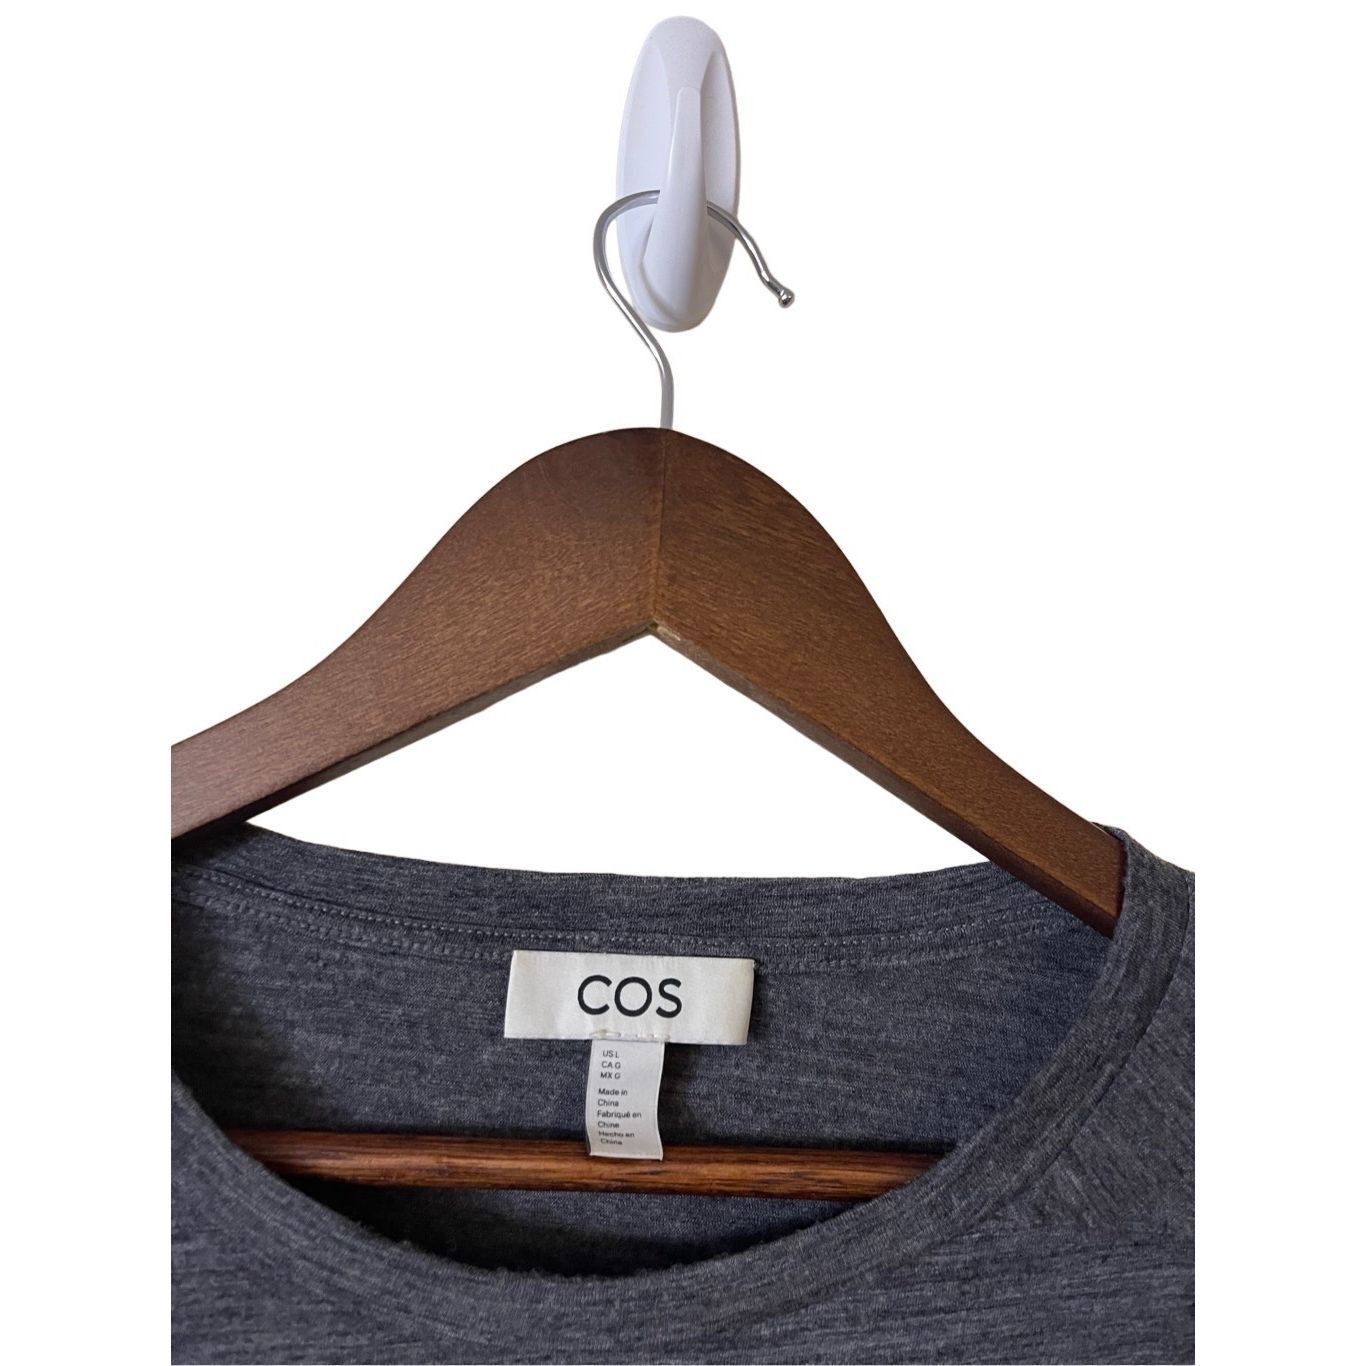 Cos COS 100% Wool Grey Crewneck Long Sleeve Lightweight Sweater Size US L / EU 52-54 / 3 - 7 Thumbnail